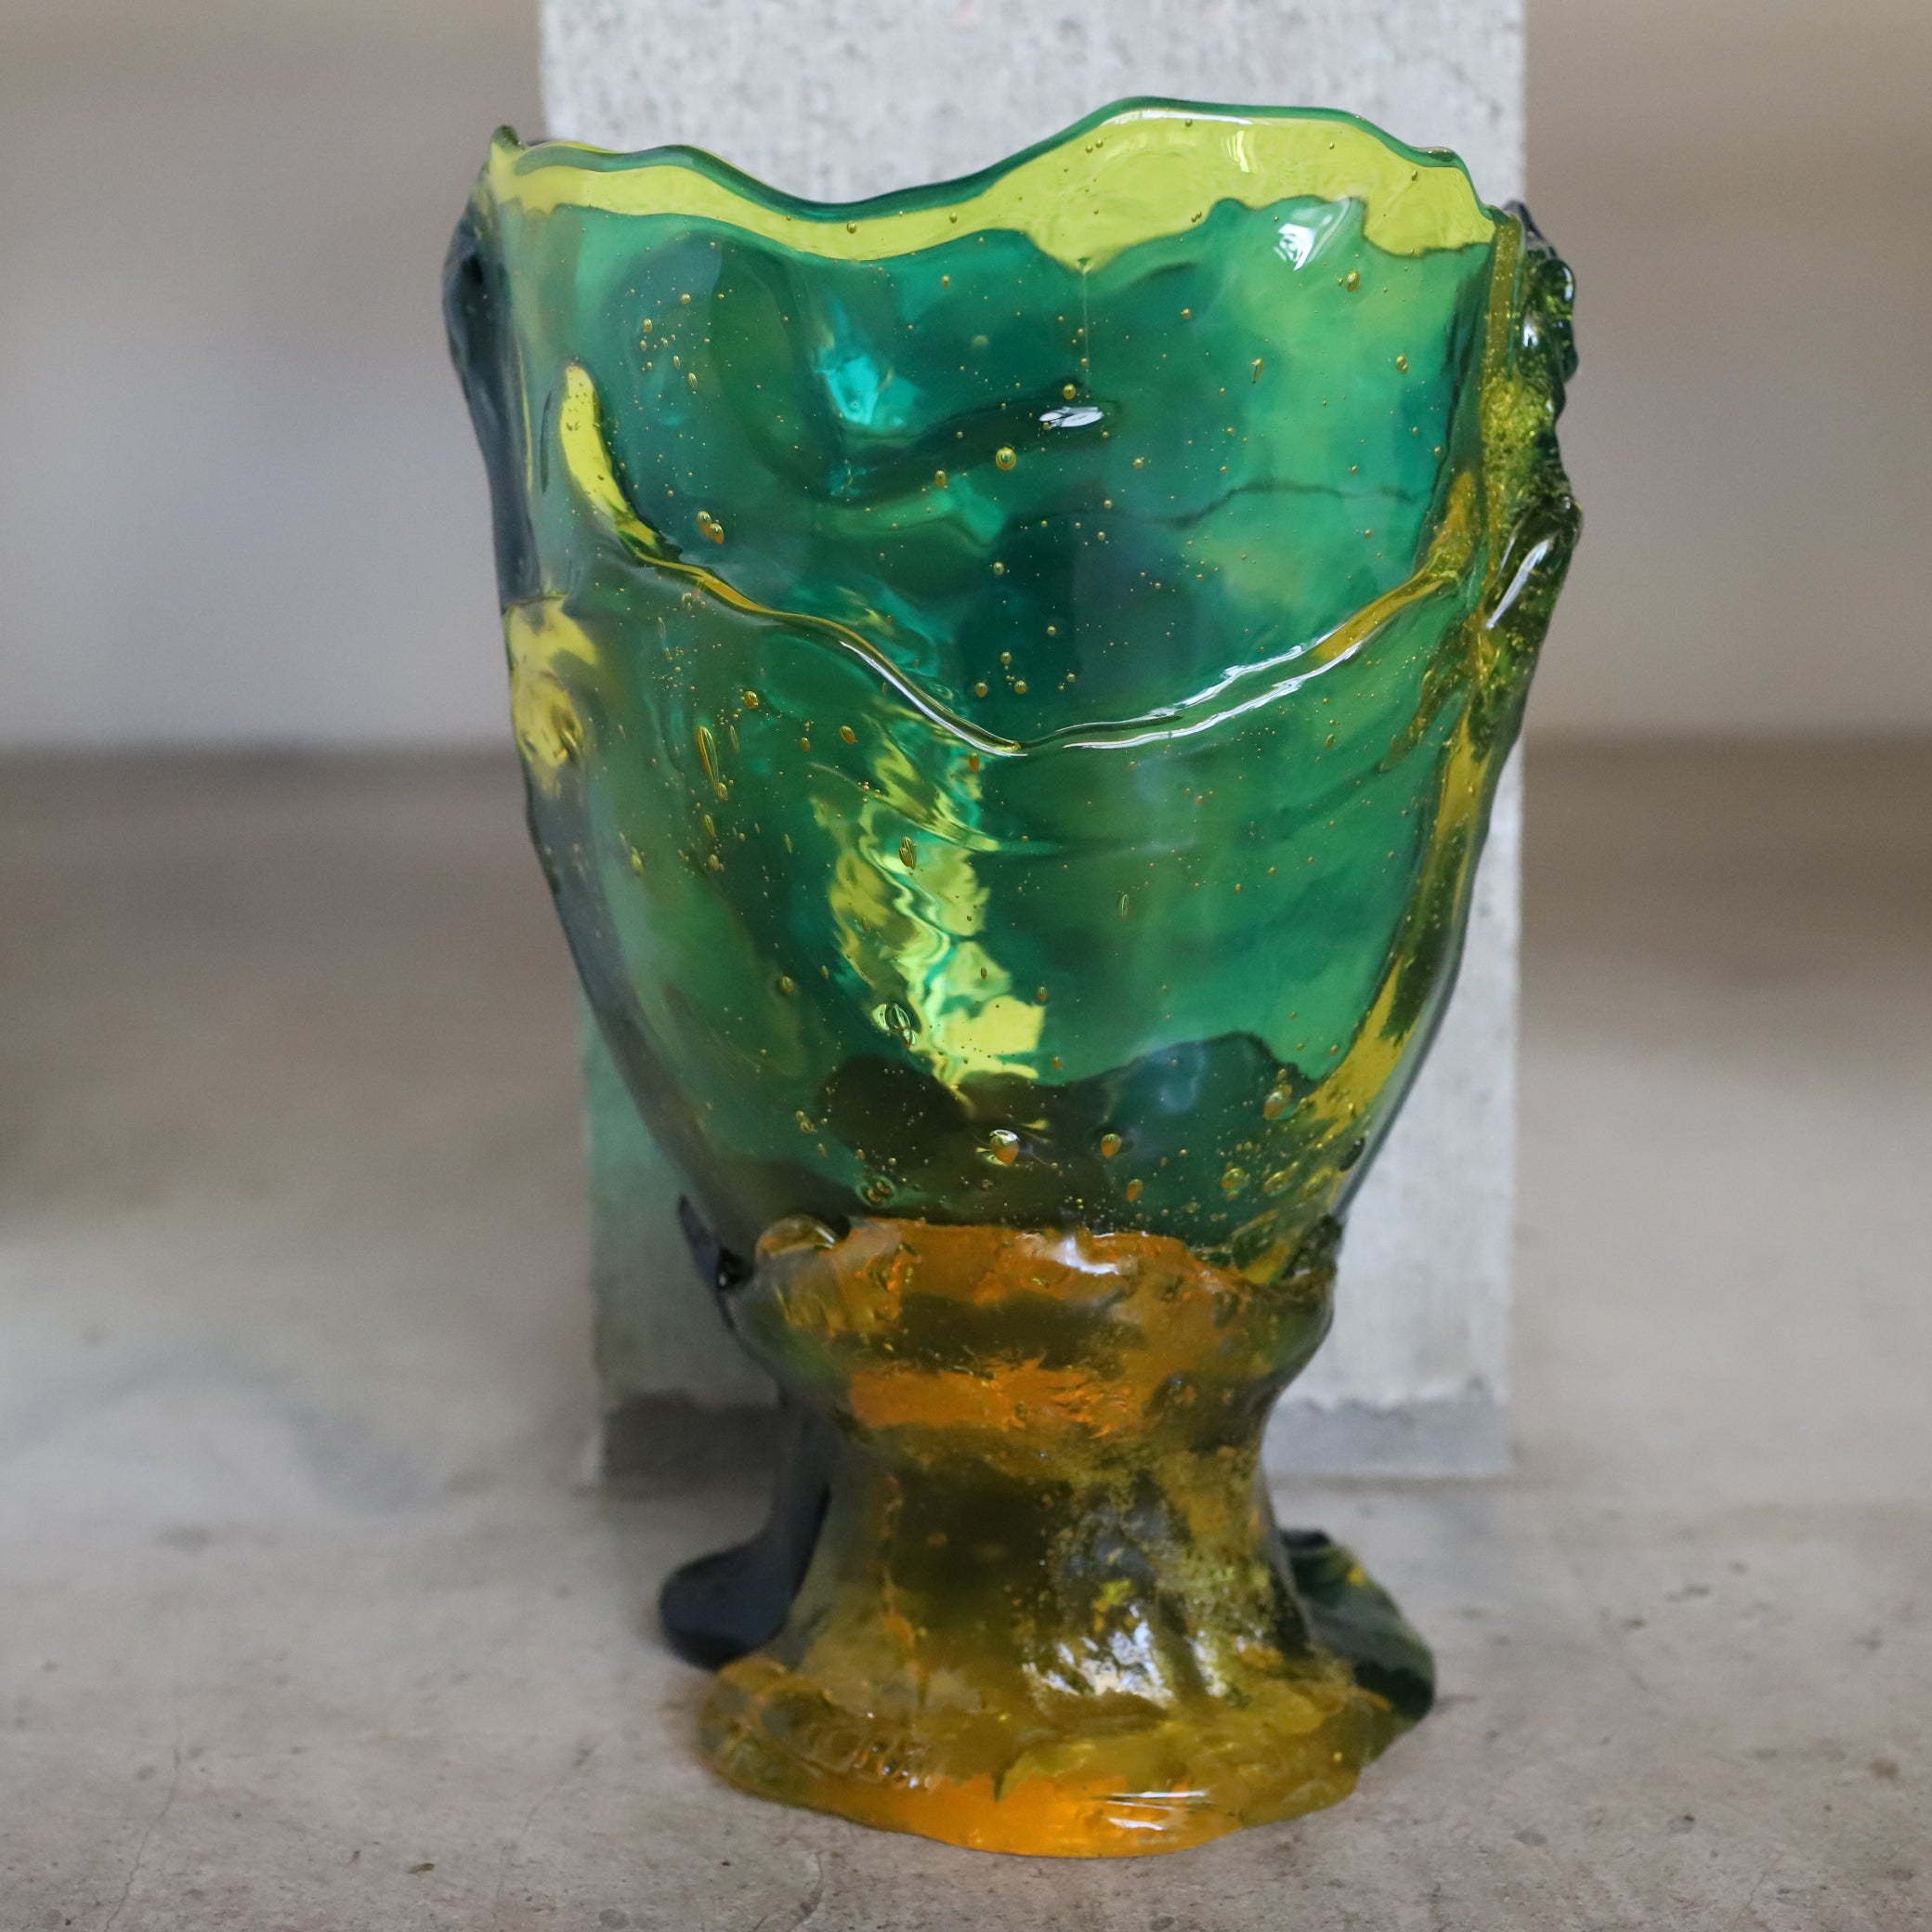 Twins C Vase - Fish Design by Gaetano Pesce